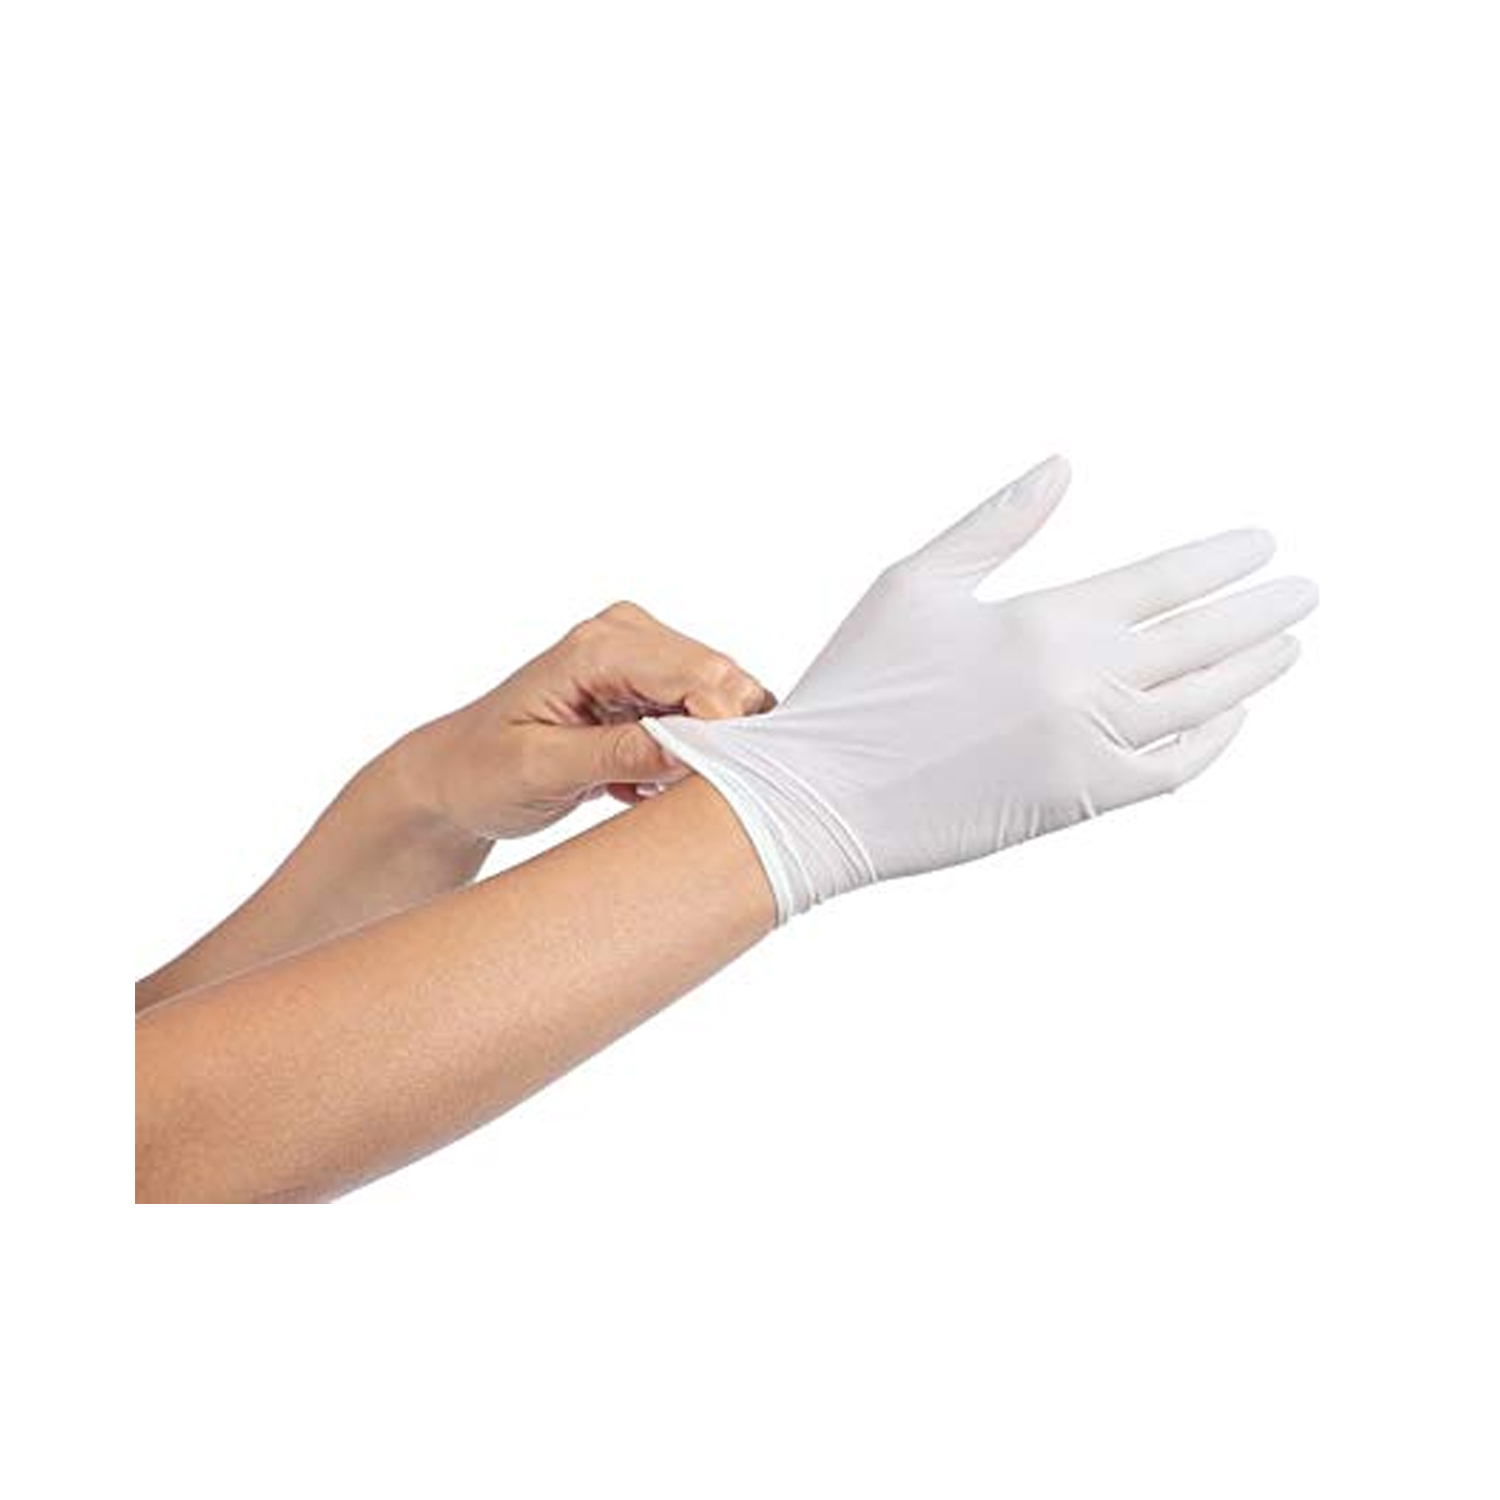 Putting gloves